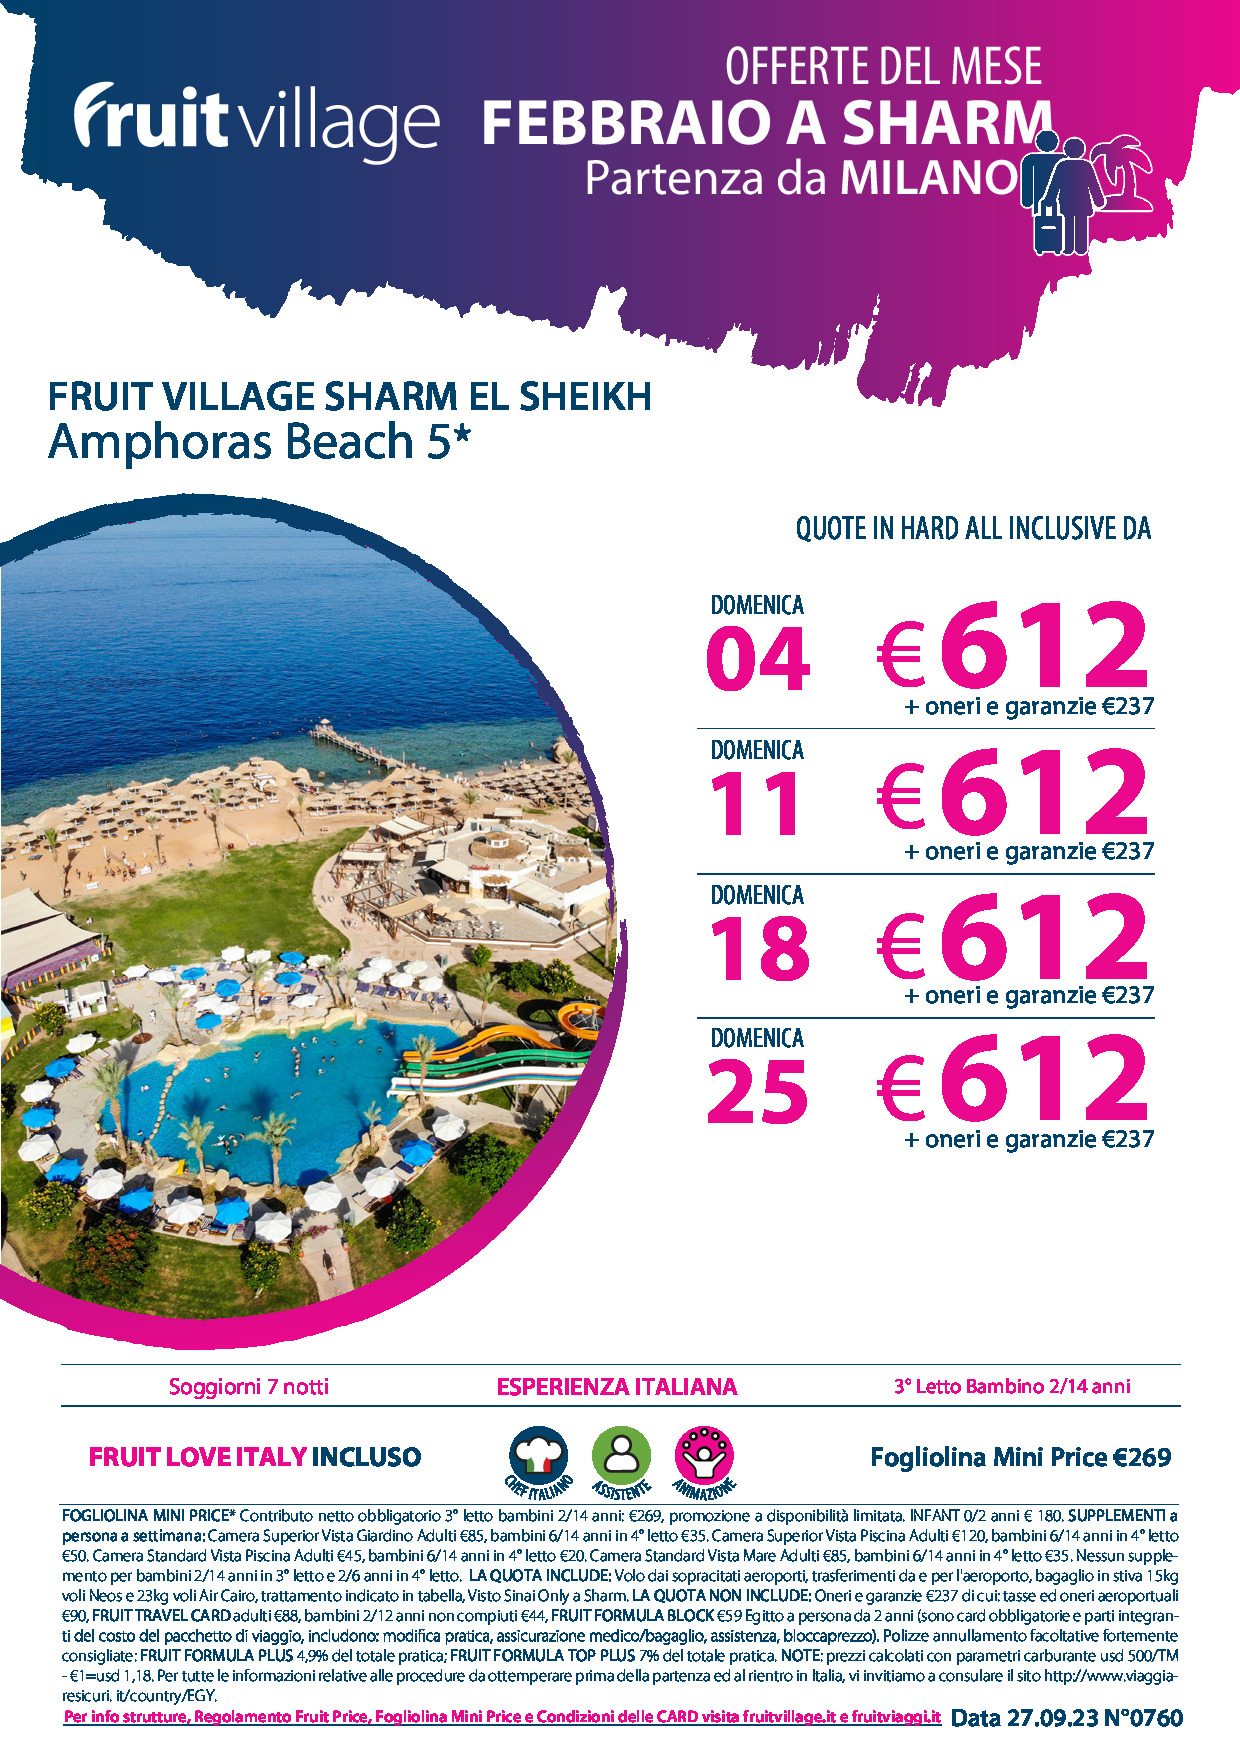 FRUIT VILLAGE Sharm El Sheikh Amphoras Beach - da Milano a Febbraio